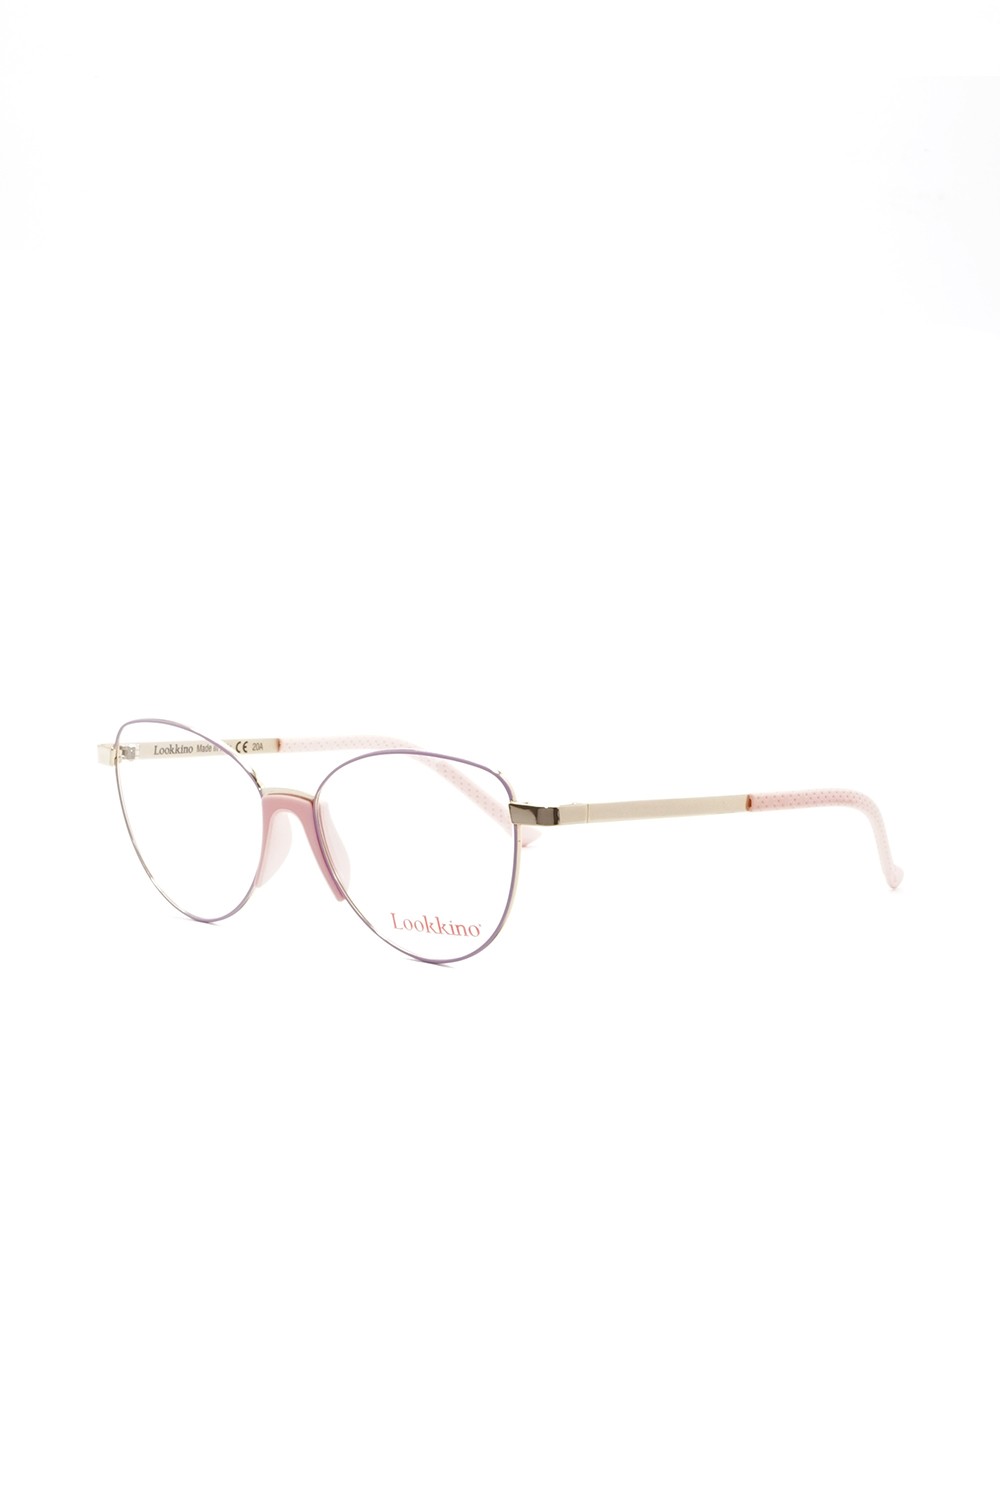 Lookkino - Occhiali da vista in metallo cat eye per bambina rosa - 3452 M2